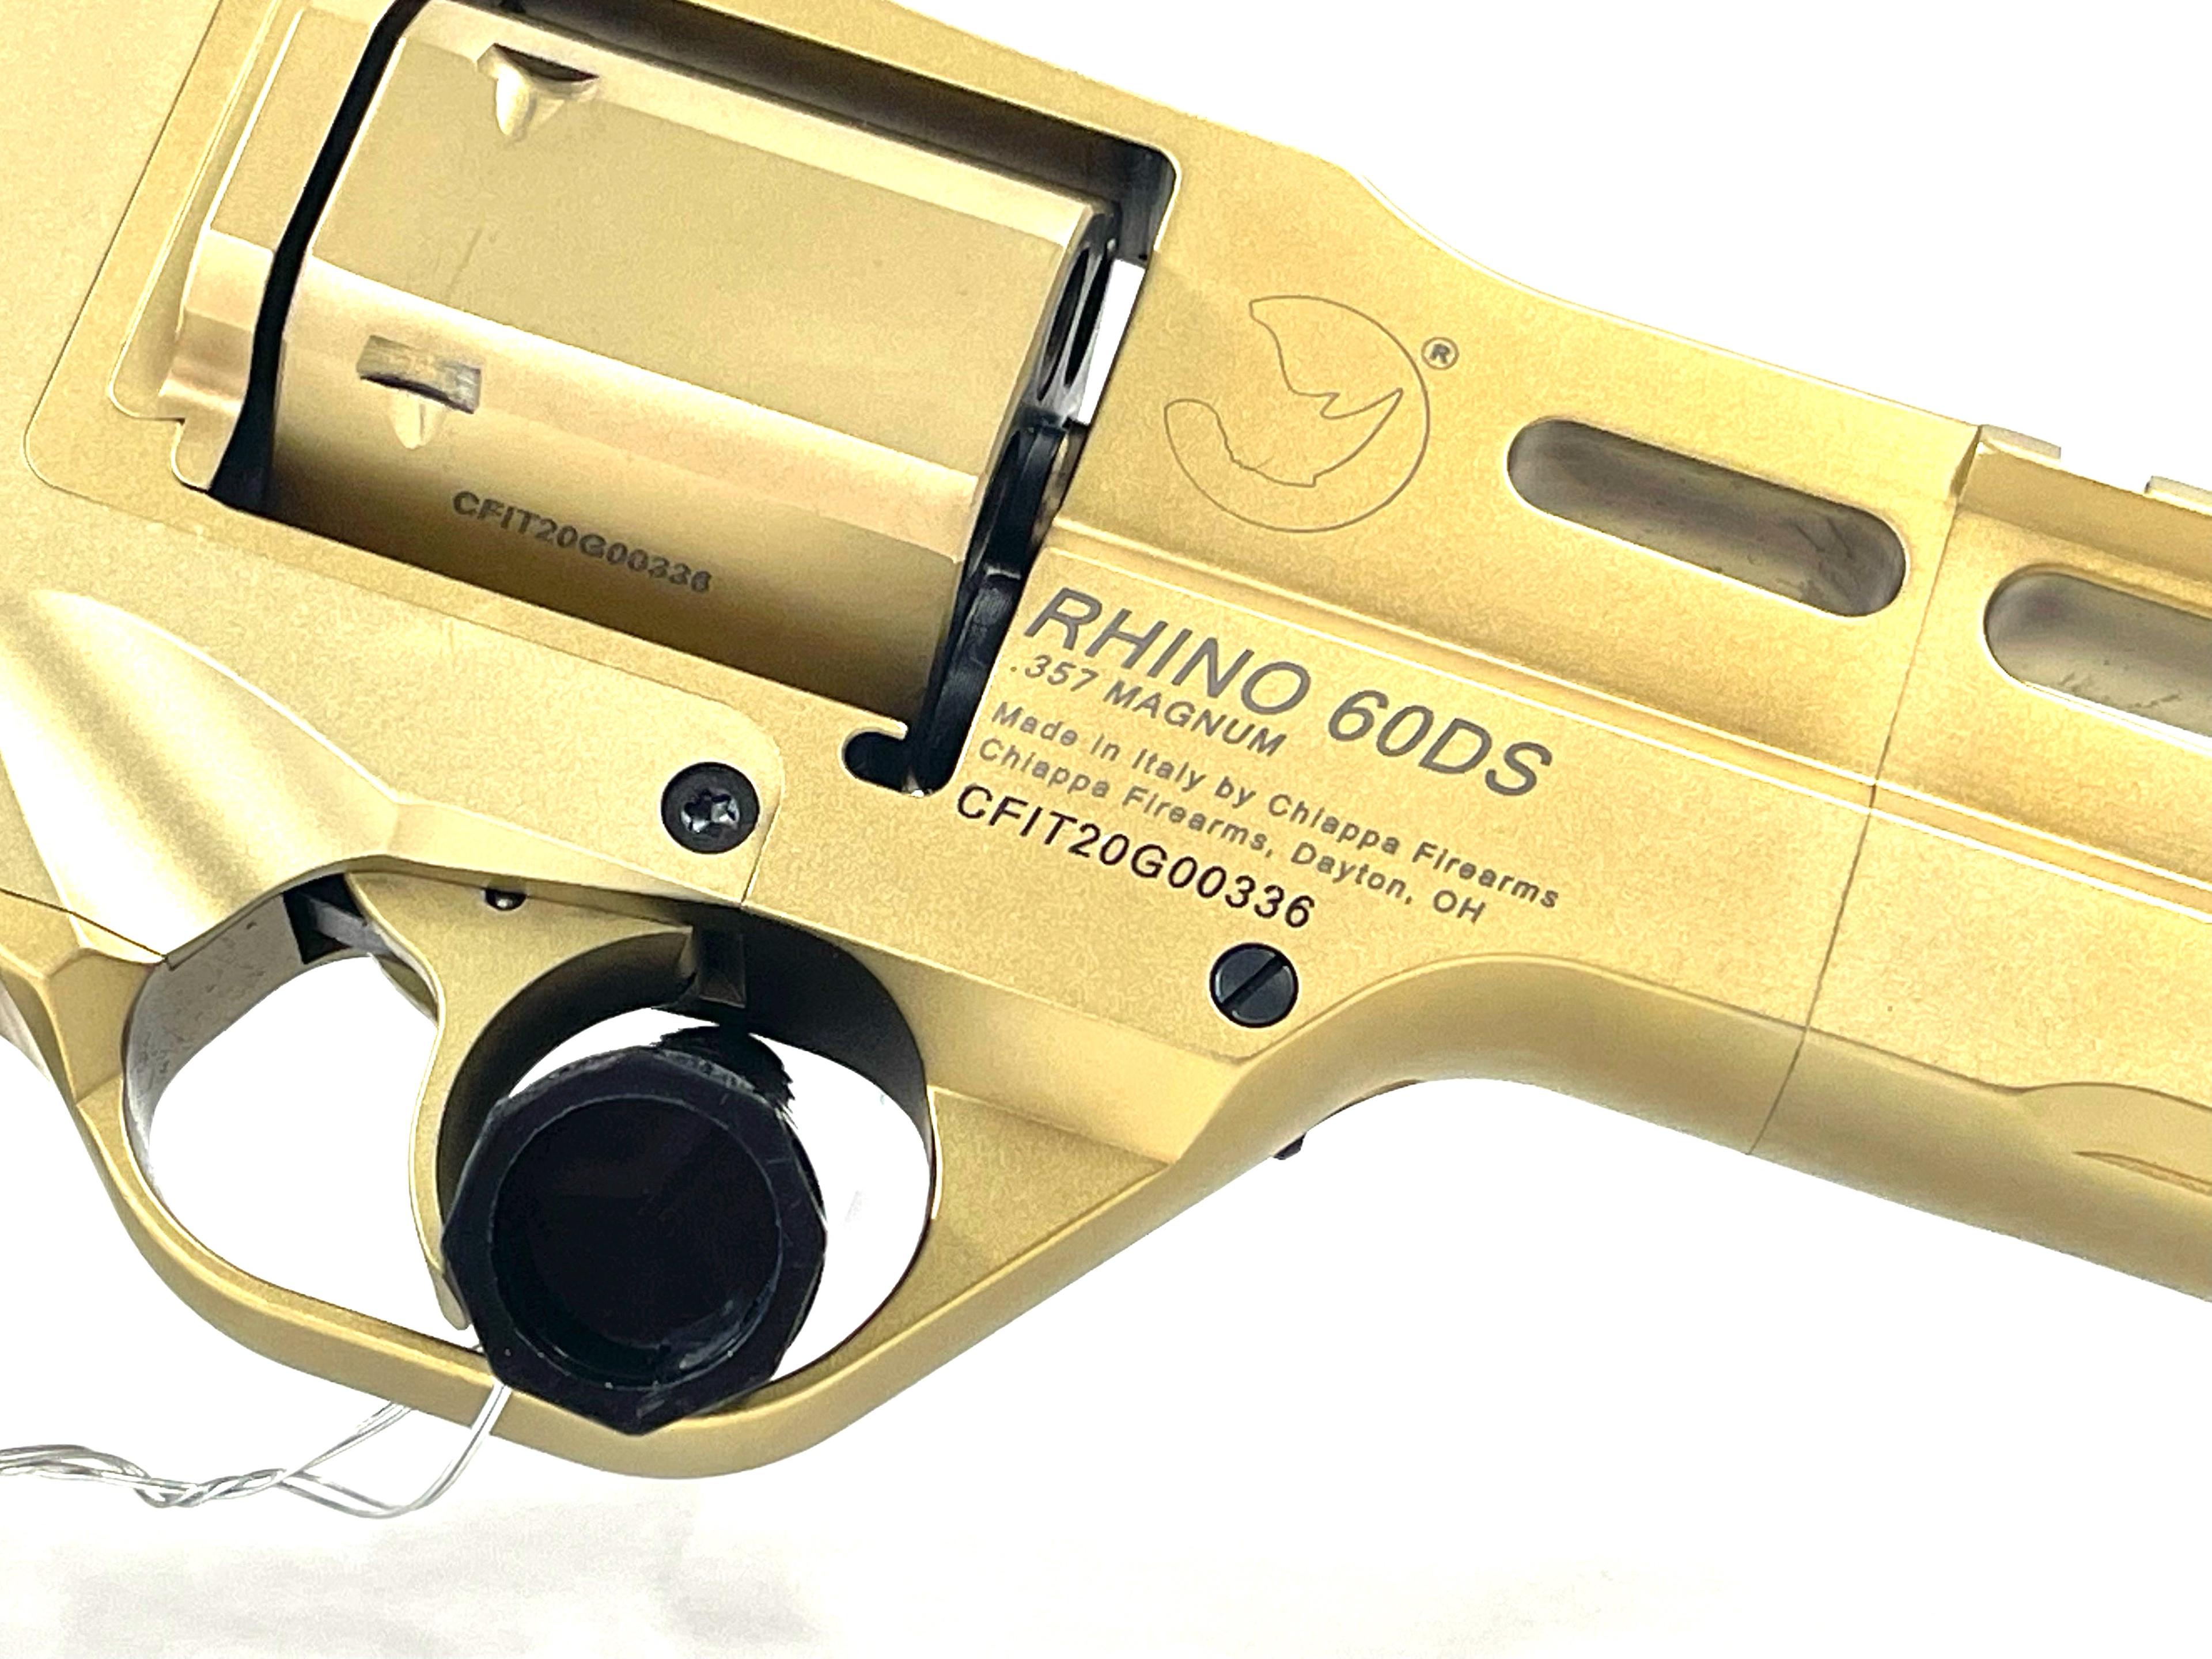 CHIAPPA Firearms, Rhino 60 DS, SN# CFIT20G00336, .357 Mag, D/A Revolver